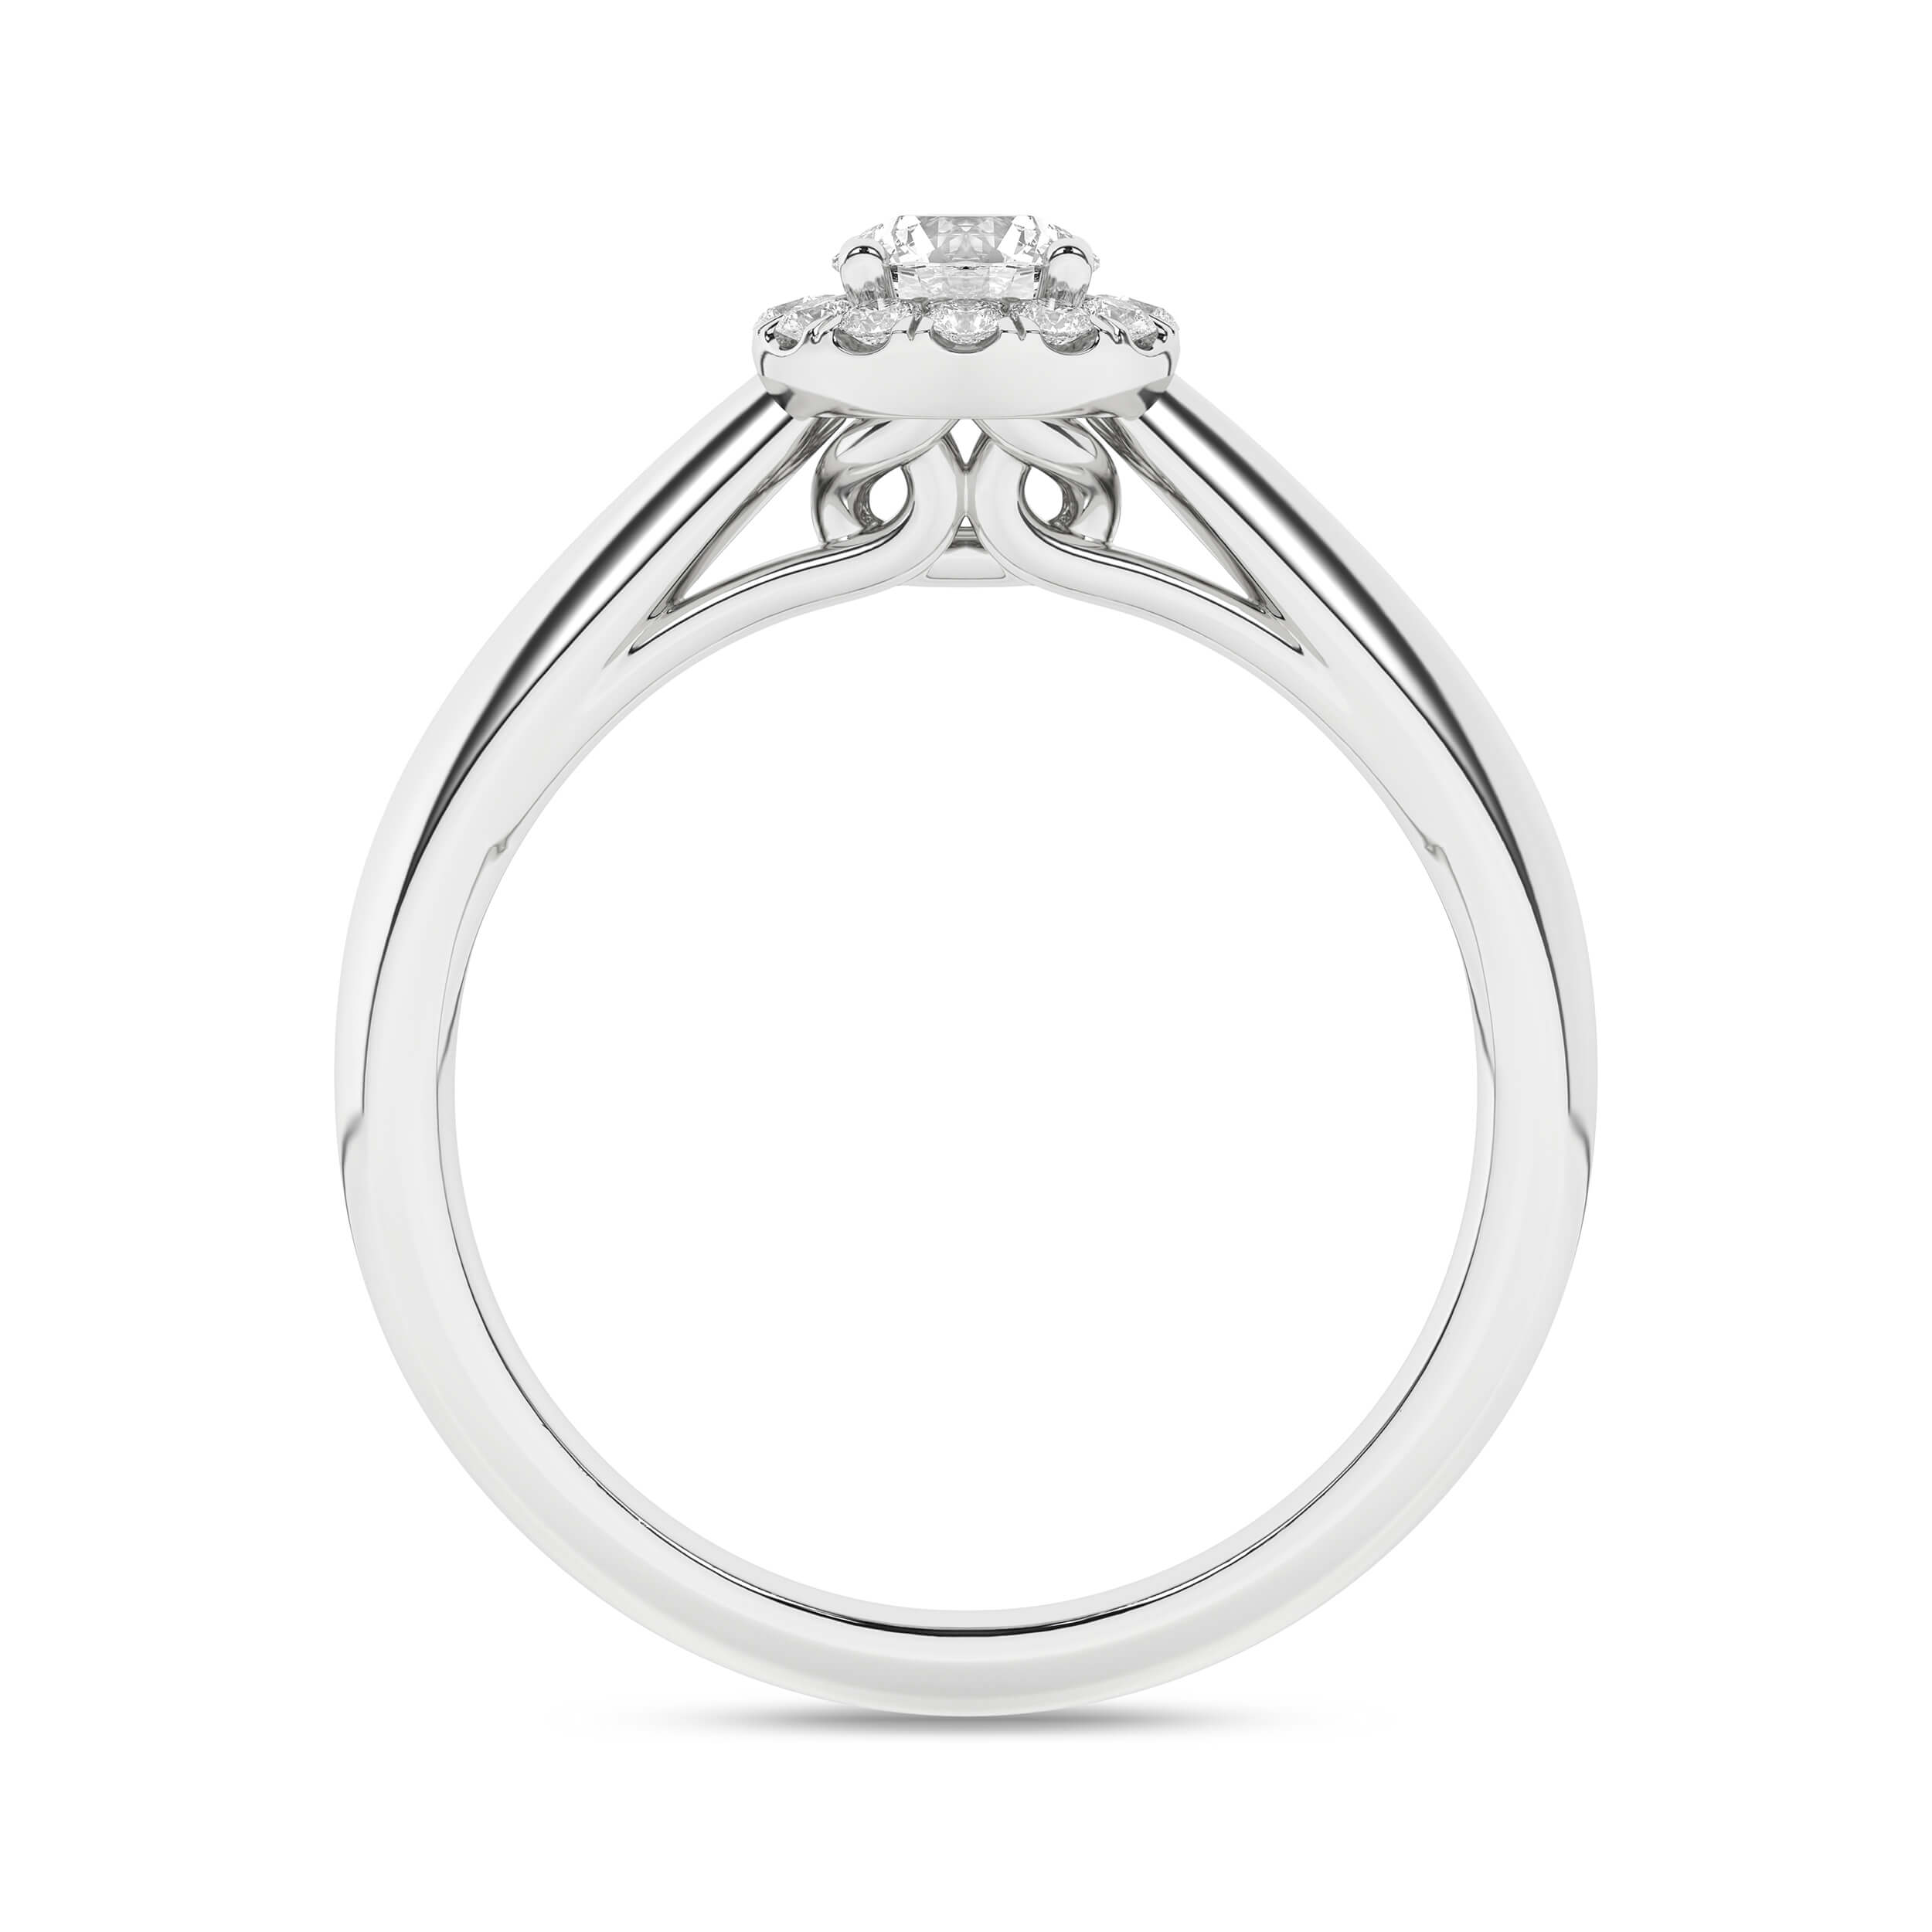 Inel de logodna din Aur Alb 14K cu Diamante 0.33Ct, articol RB20698EG, previzualizare foto 3